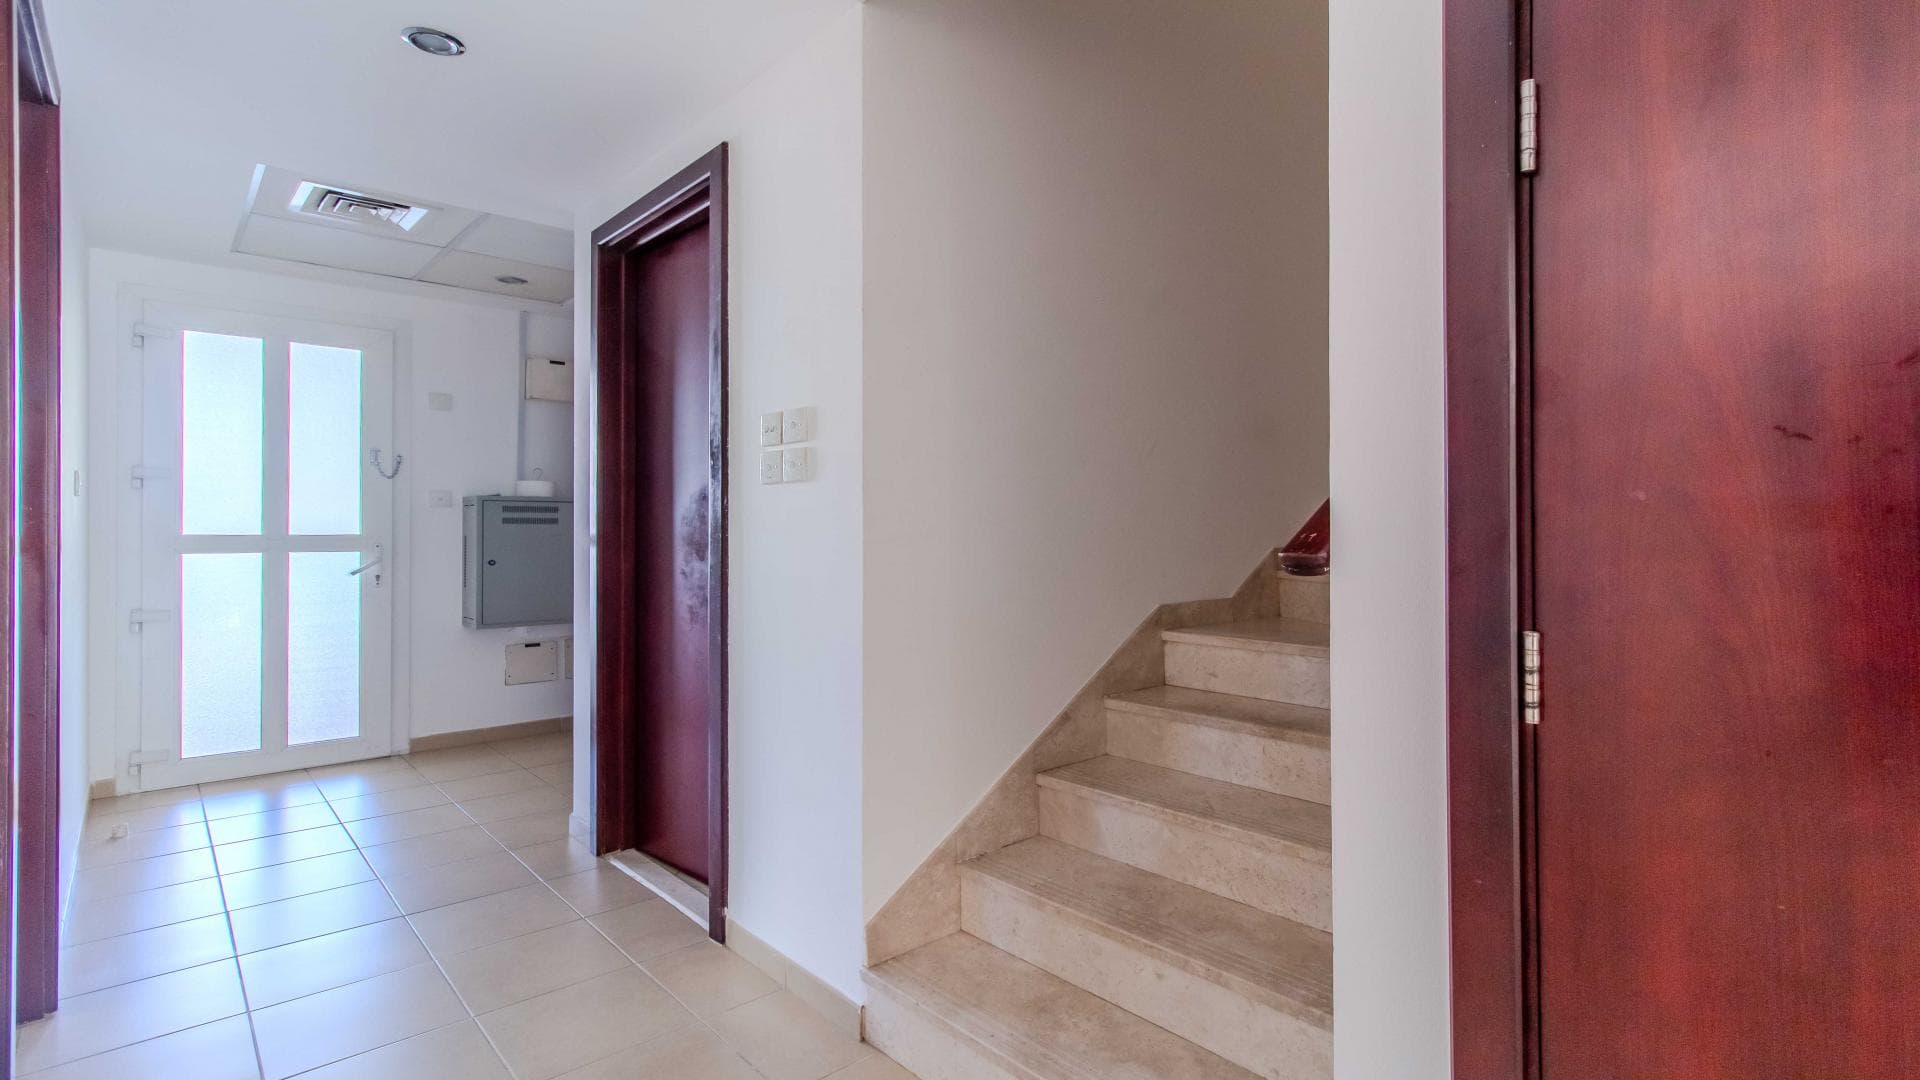 3 Bedroom Villa For Rent Jumeirah Business Centre 5 Lp38947 264ad9a818c27800.jpg